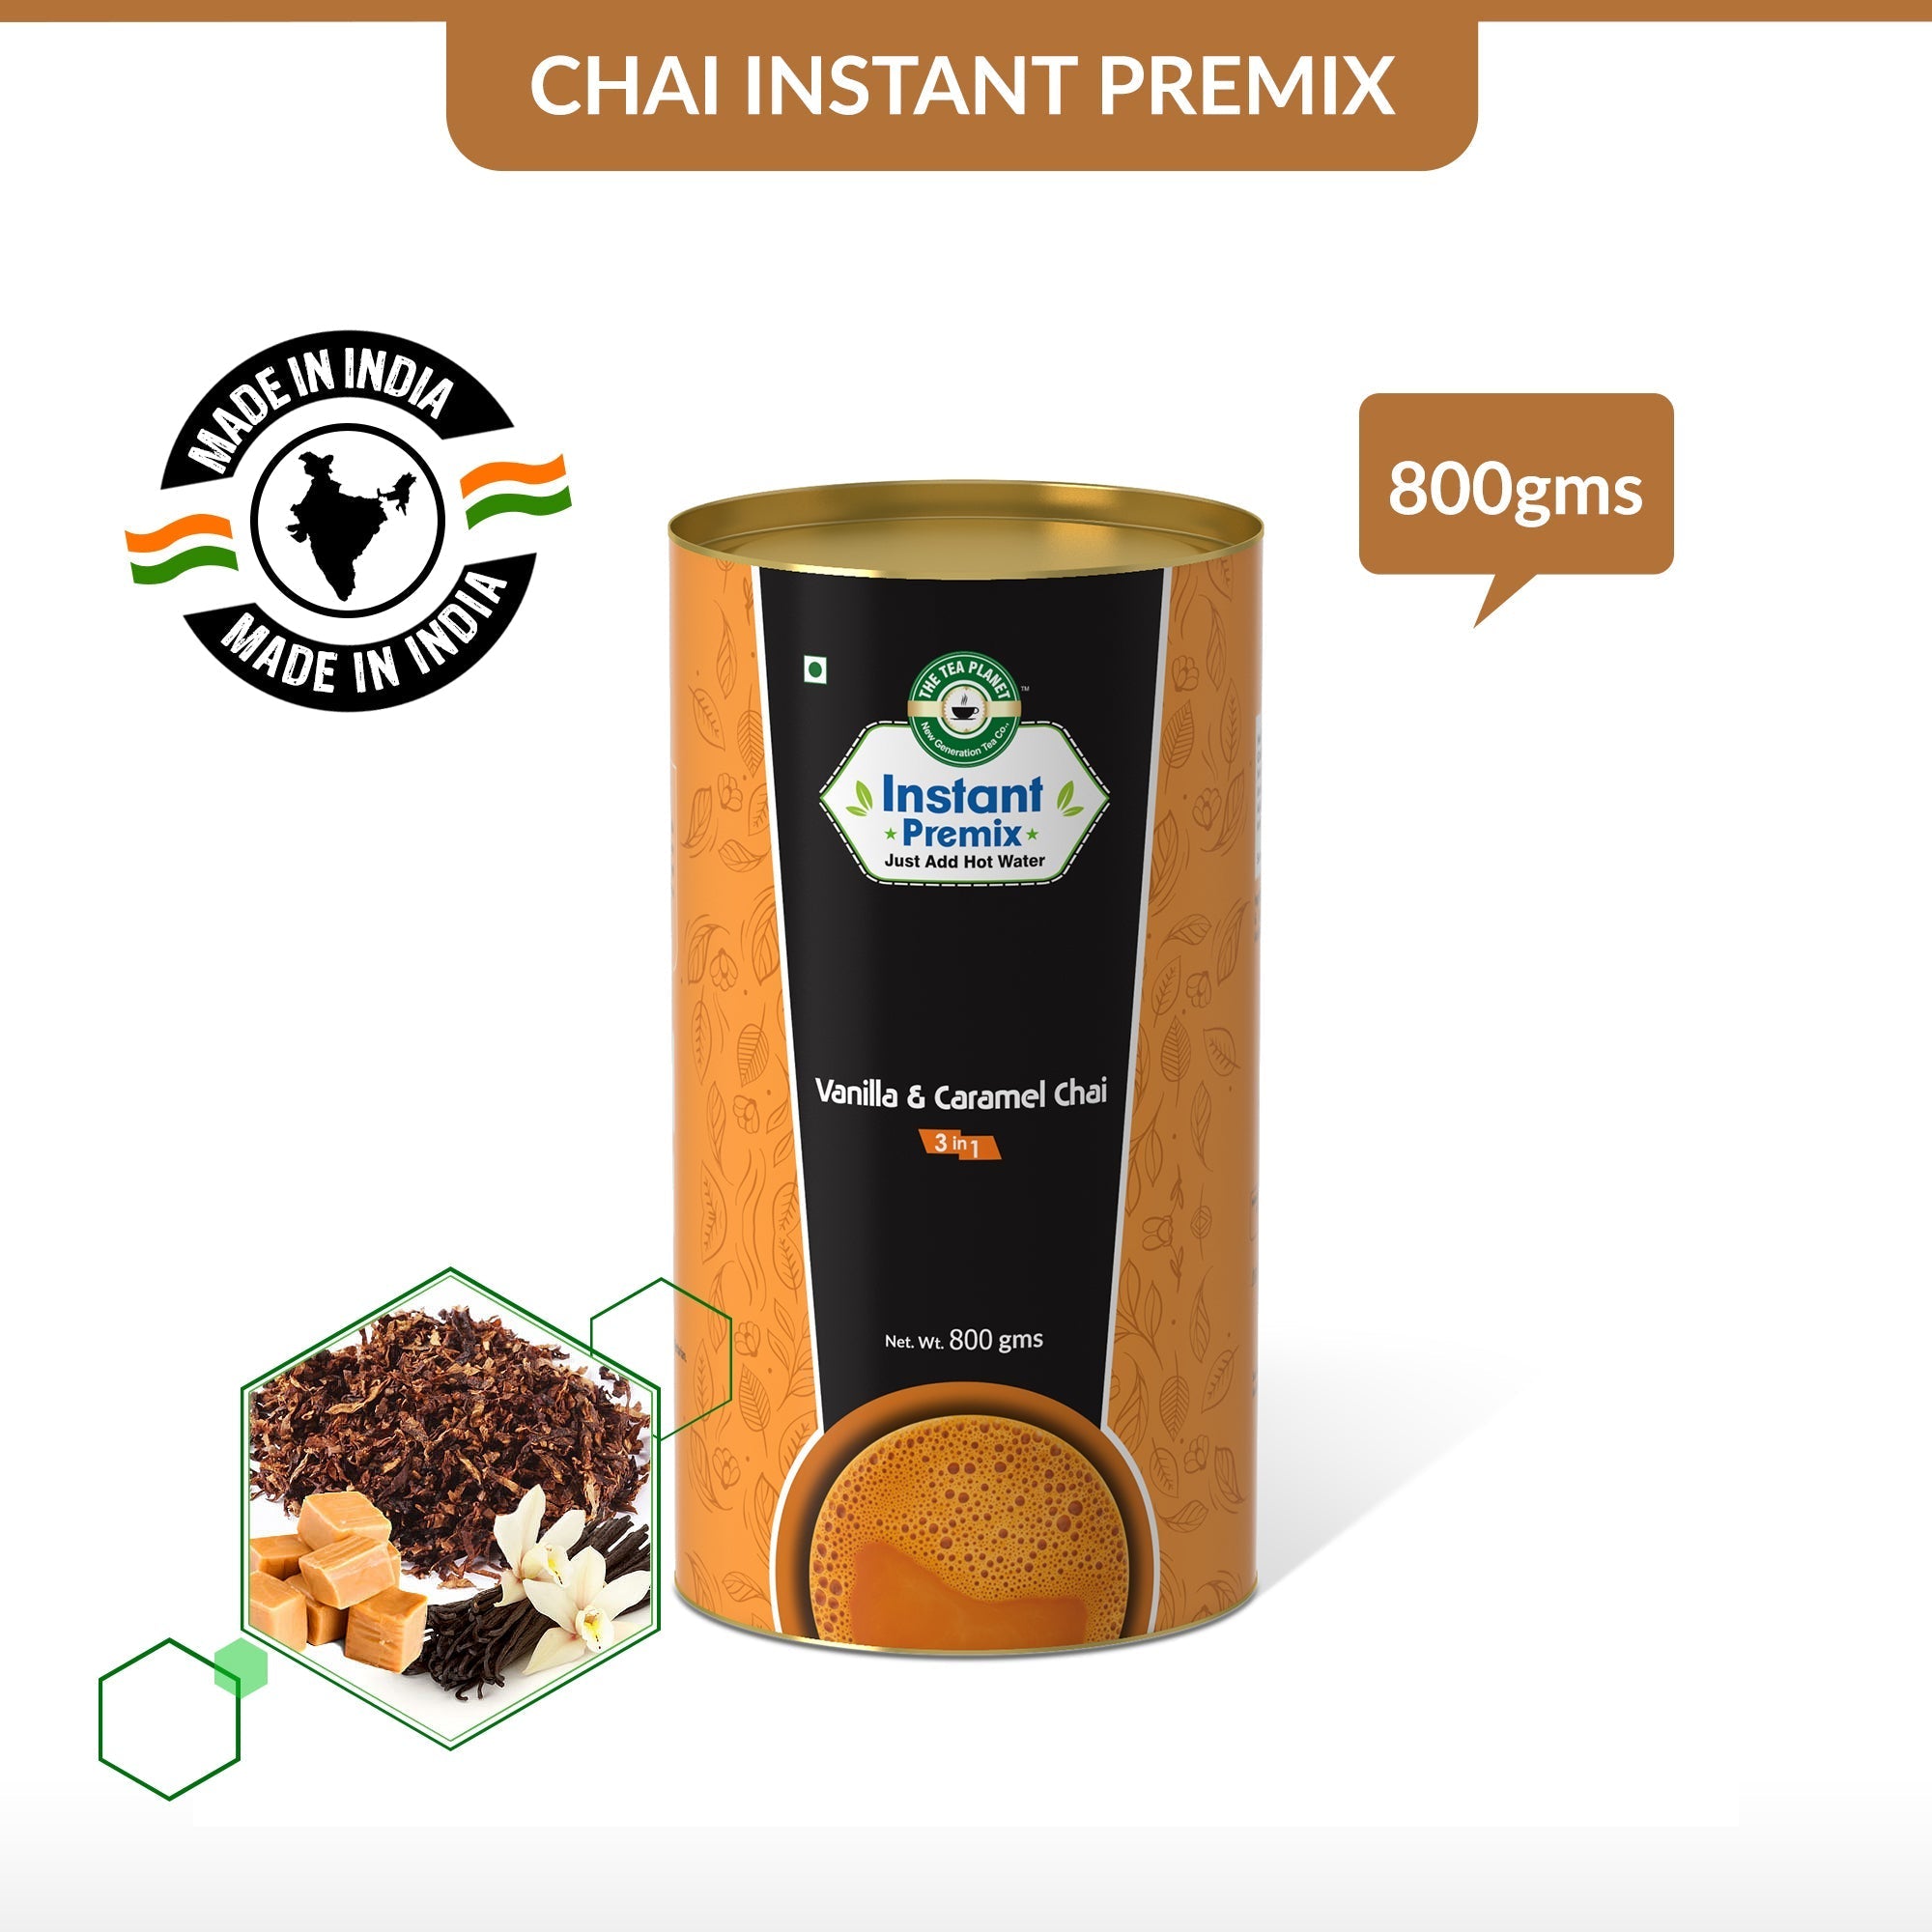 Vanilla & Caramel Chai Premix (3 in 1) - 800 gms